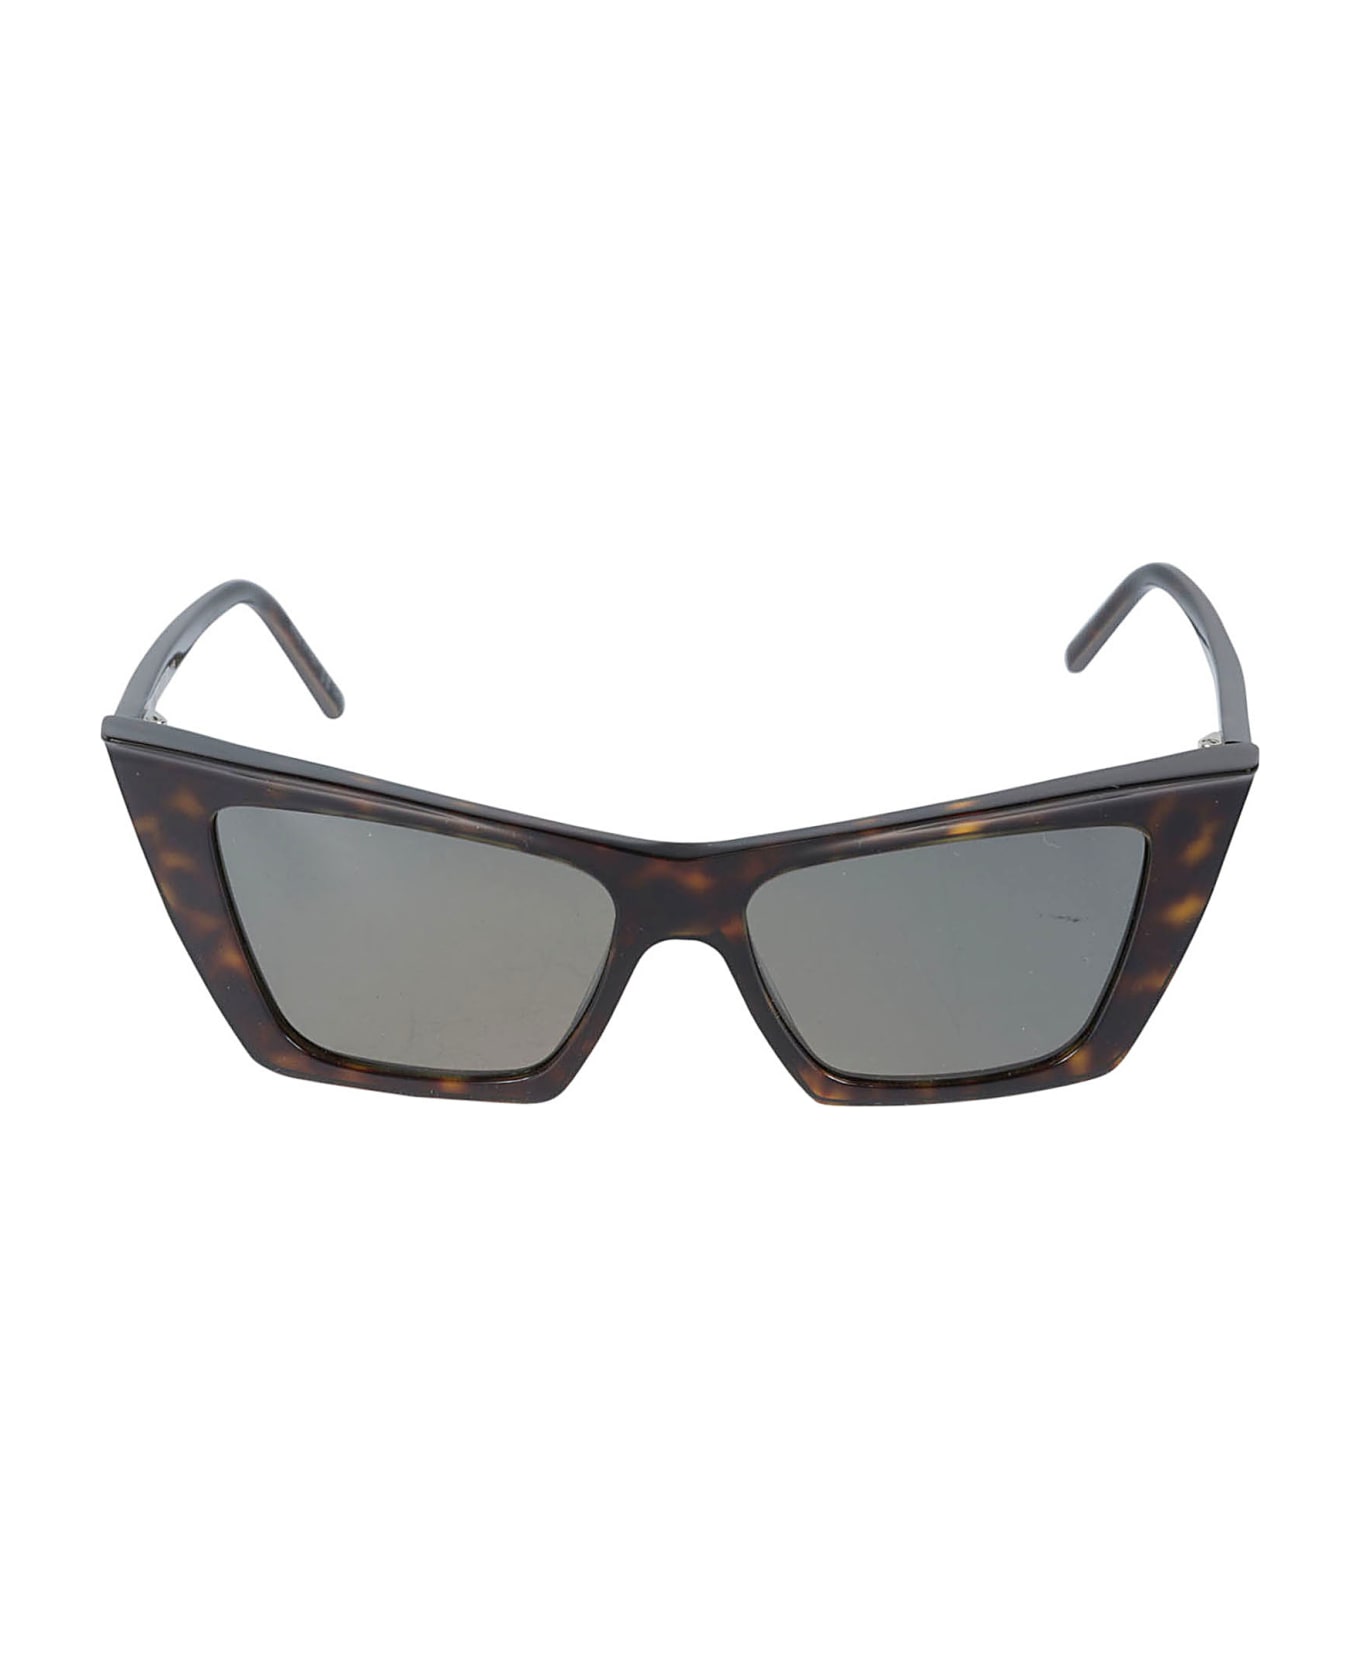 Saint Laurent Eyewear Square Cat Eye Sunglasses - Havana Grey